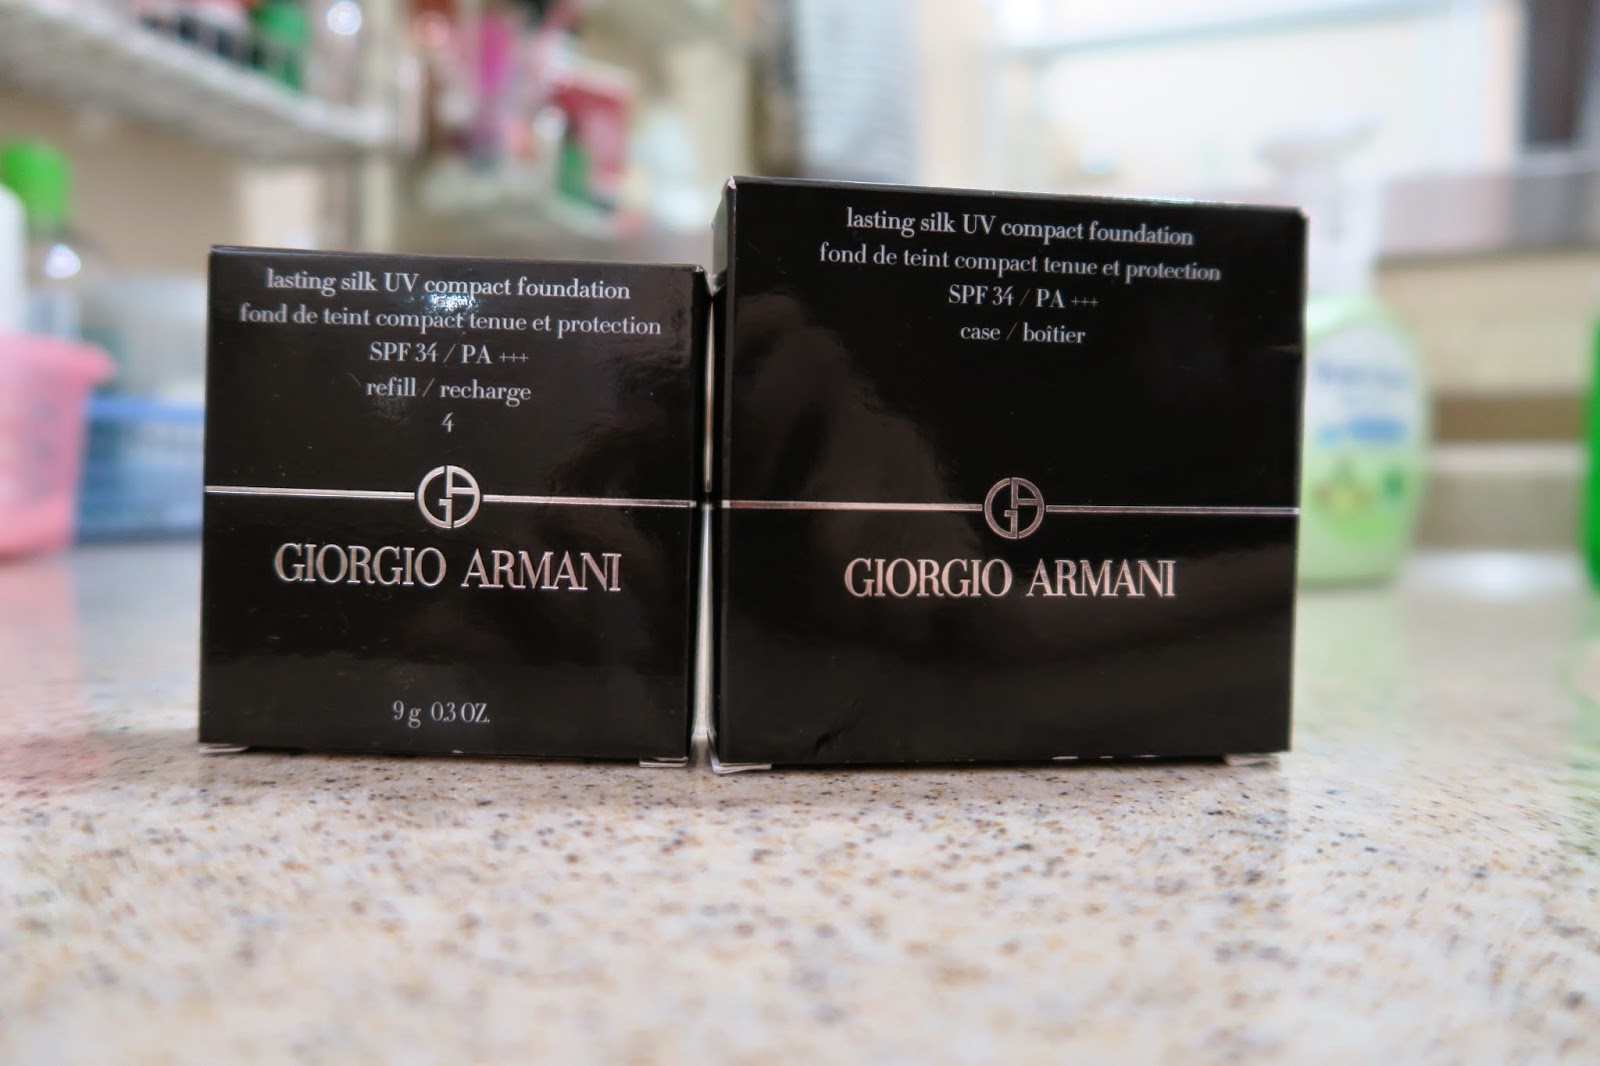 giorgio armani lasting silk uv compact foundation reviews